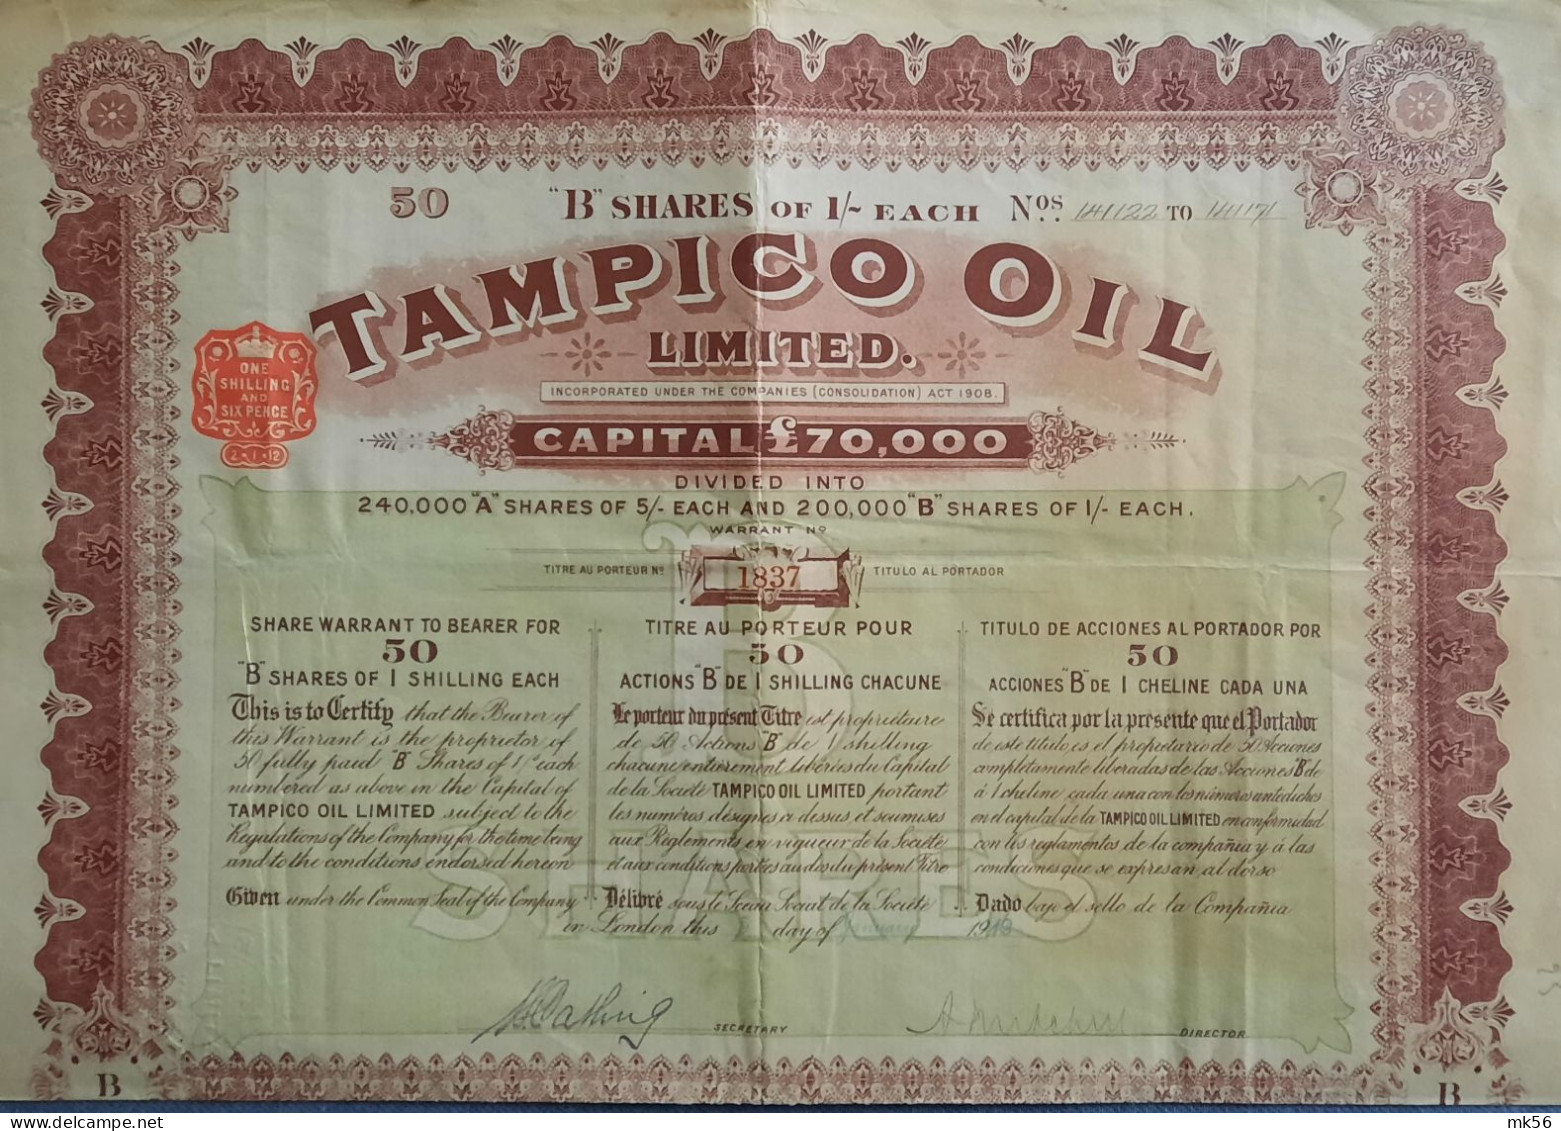 Tampico Oil Ltd - 1919 - London - Share Warrant To Bearer For 50 B-shares - Pétrole